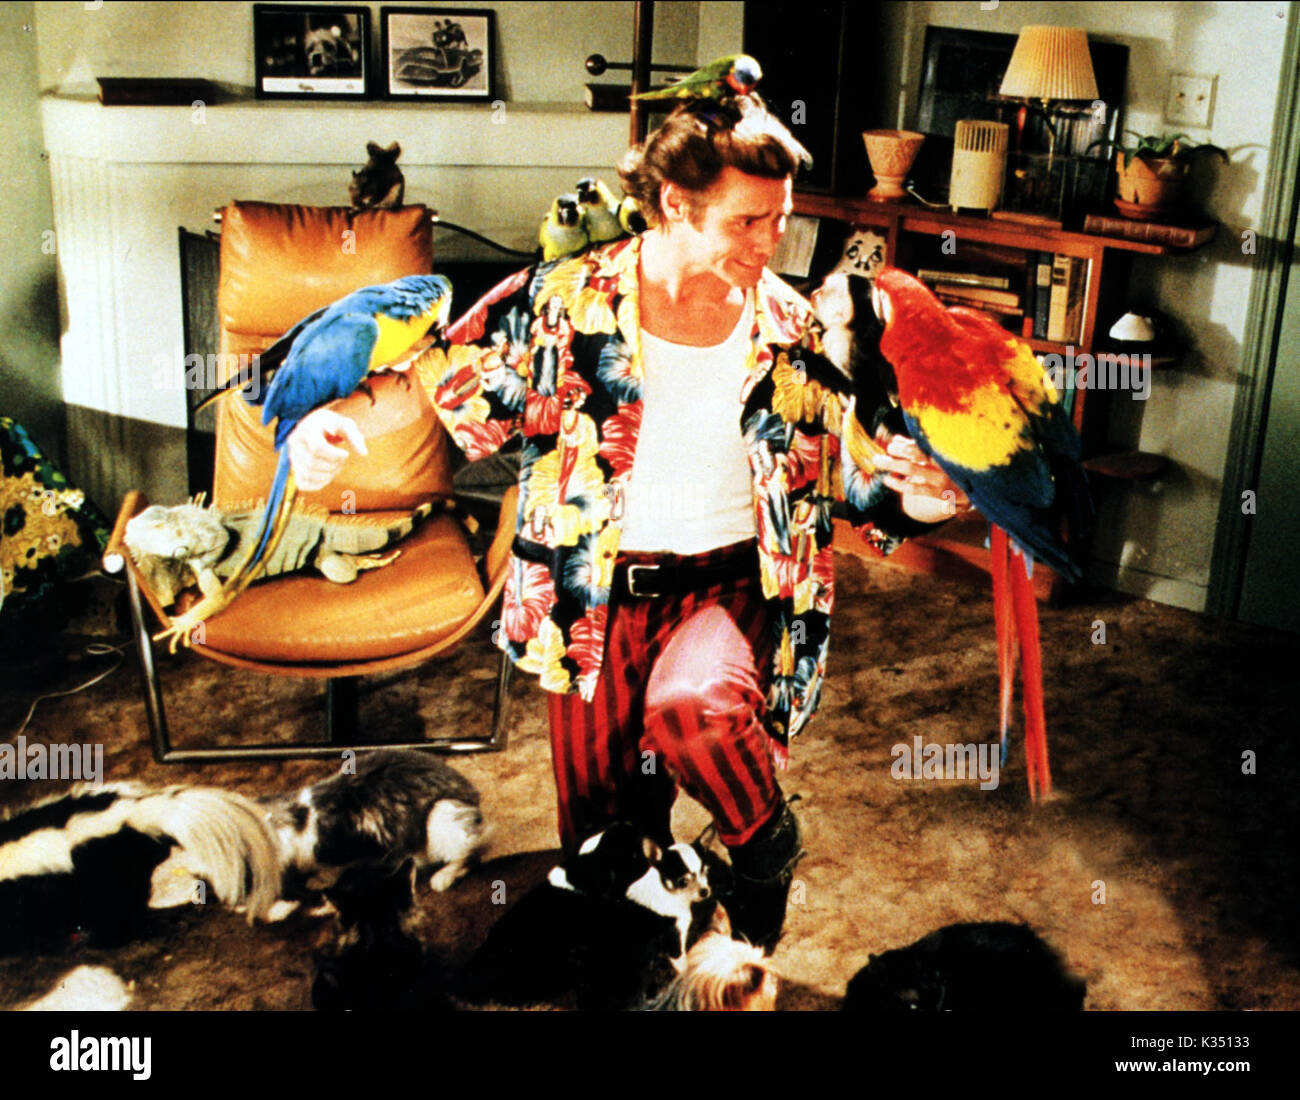 ACE VENTURA - PET DETECTIVE NOI 1994] Jim Carrey Foto Stock